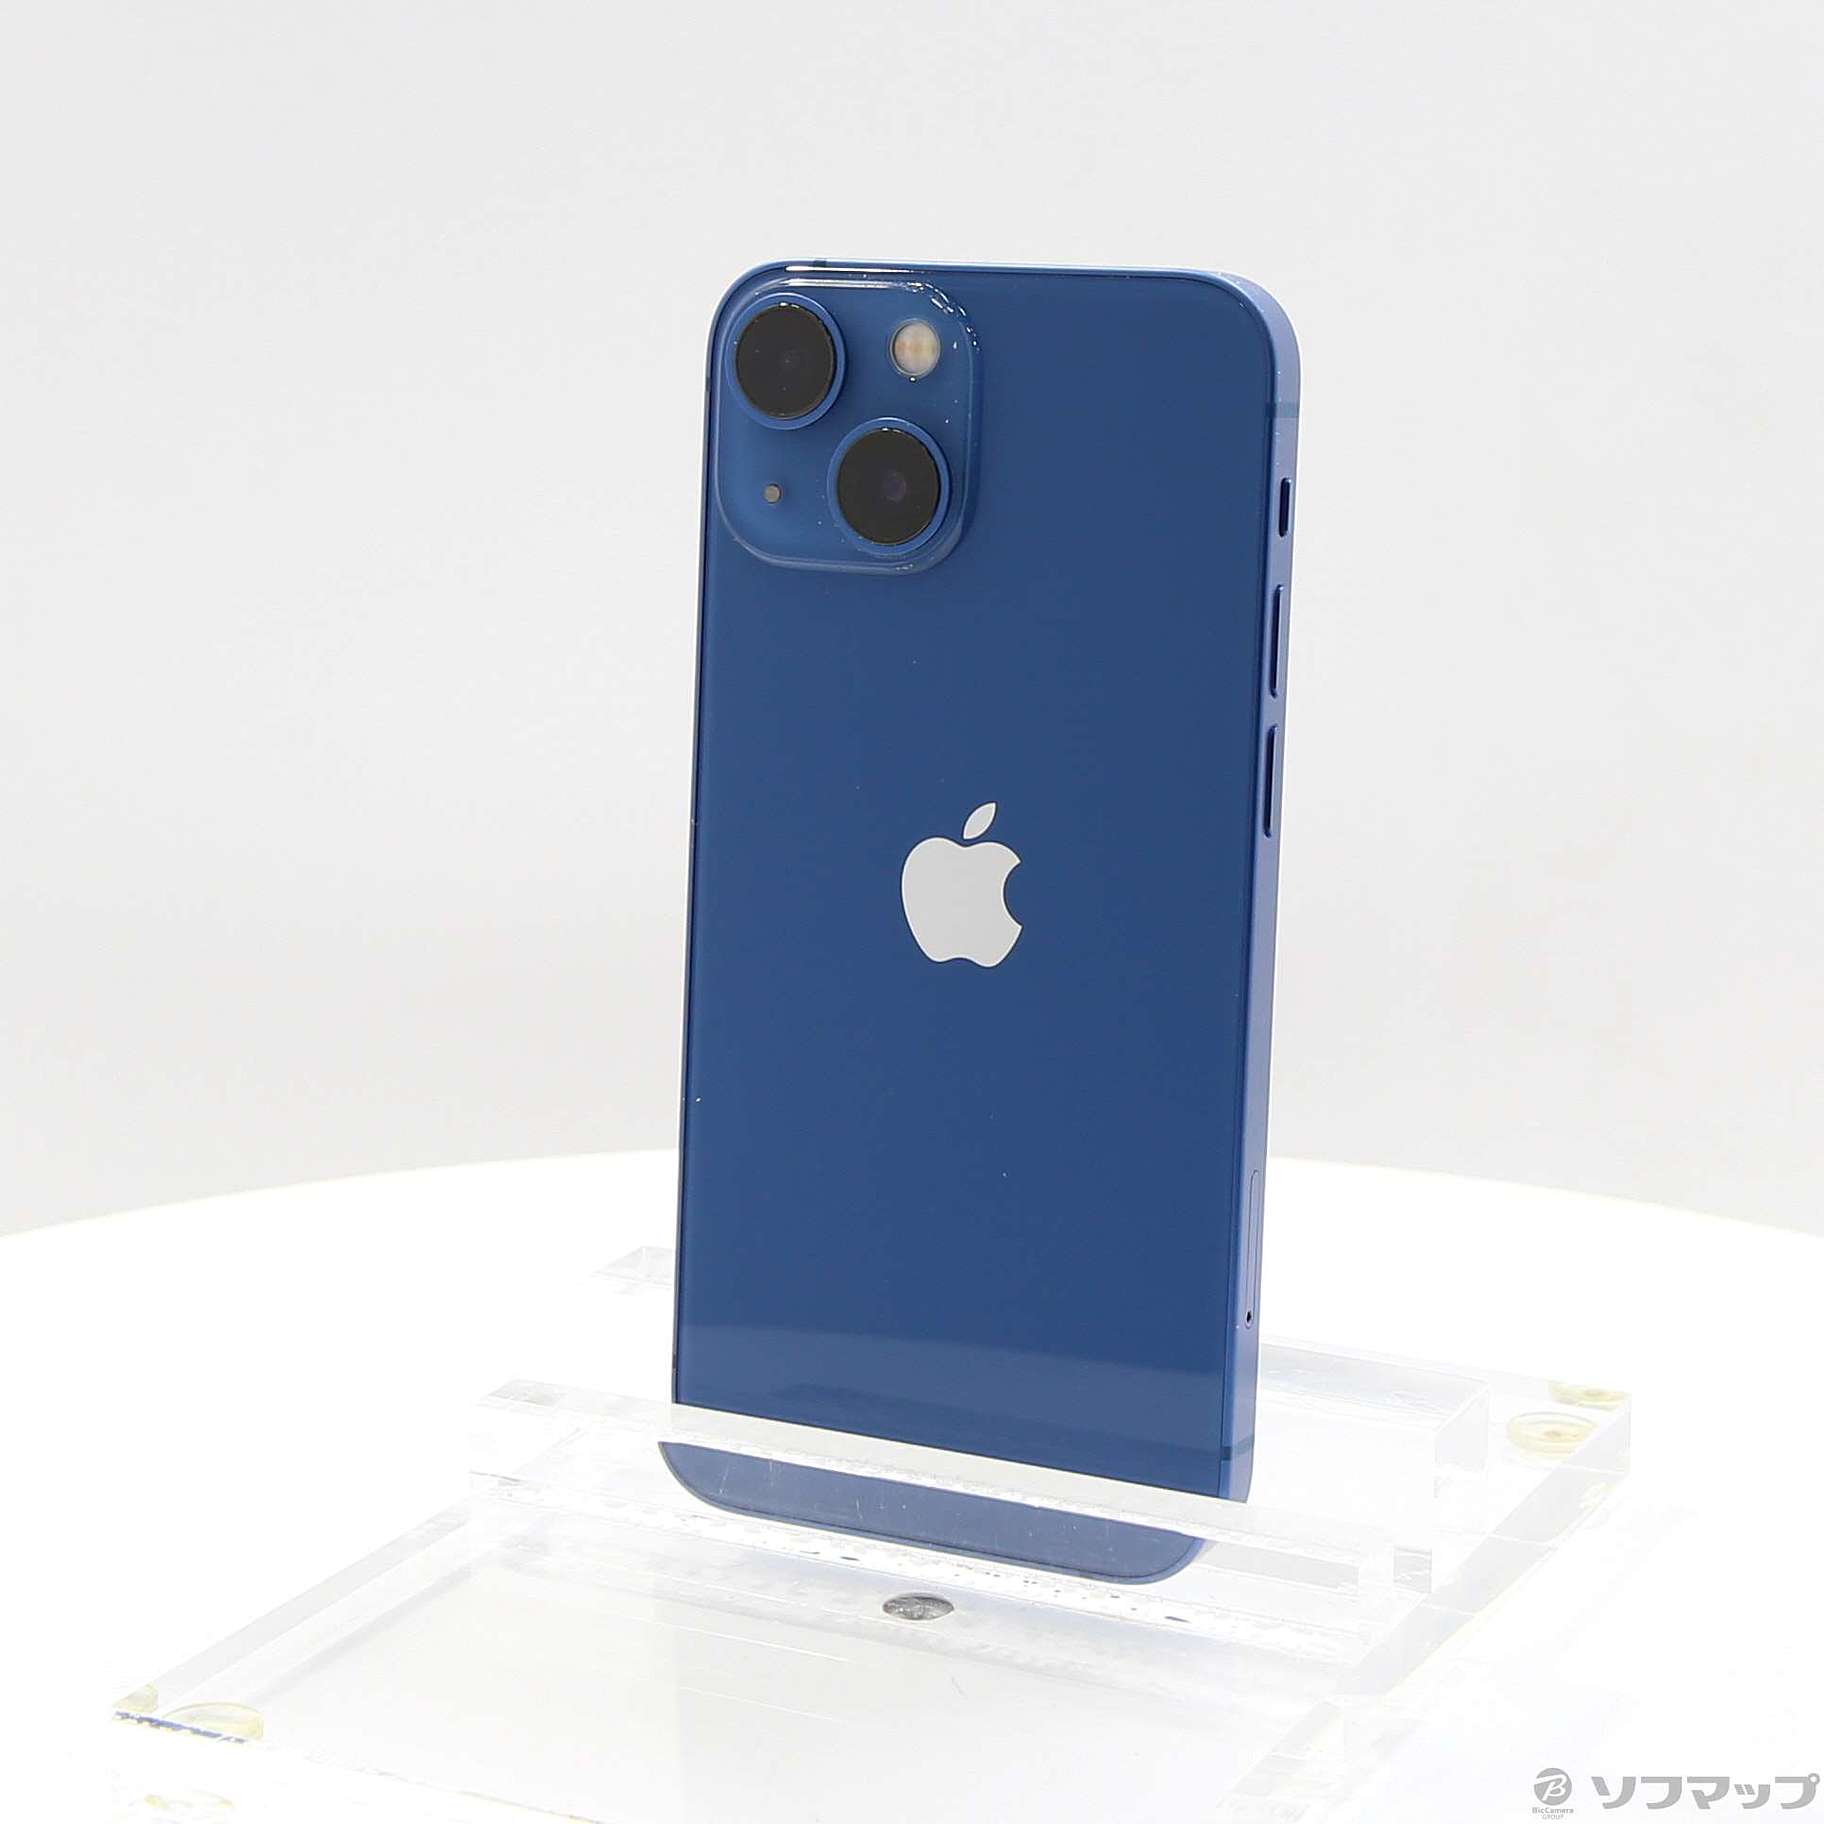 iPhone 13 mini 128GB SIMフリー [ブルー] 中古(白ロム)価格比較